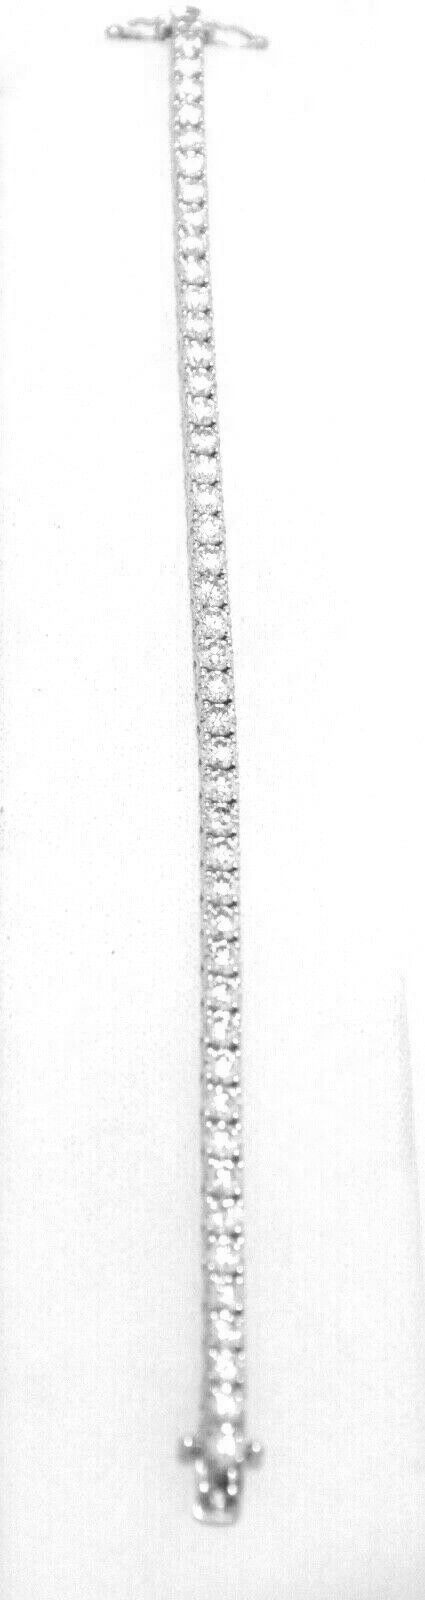 diamond-tennis-bracelet-7.87-ct-14kt-white-gold-7-inch